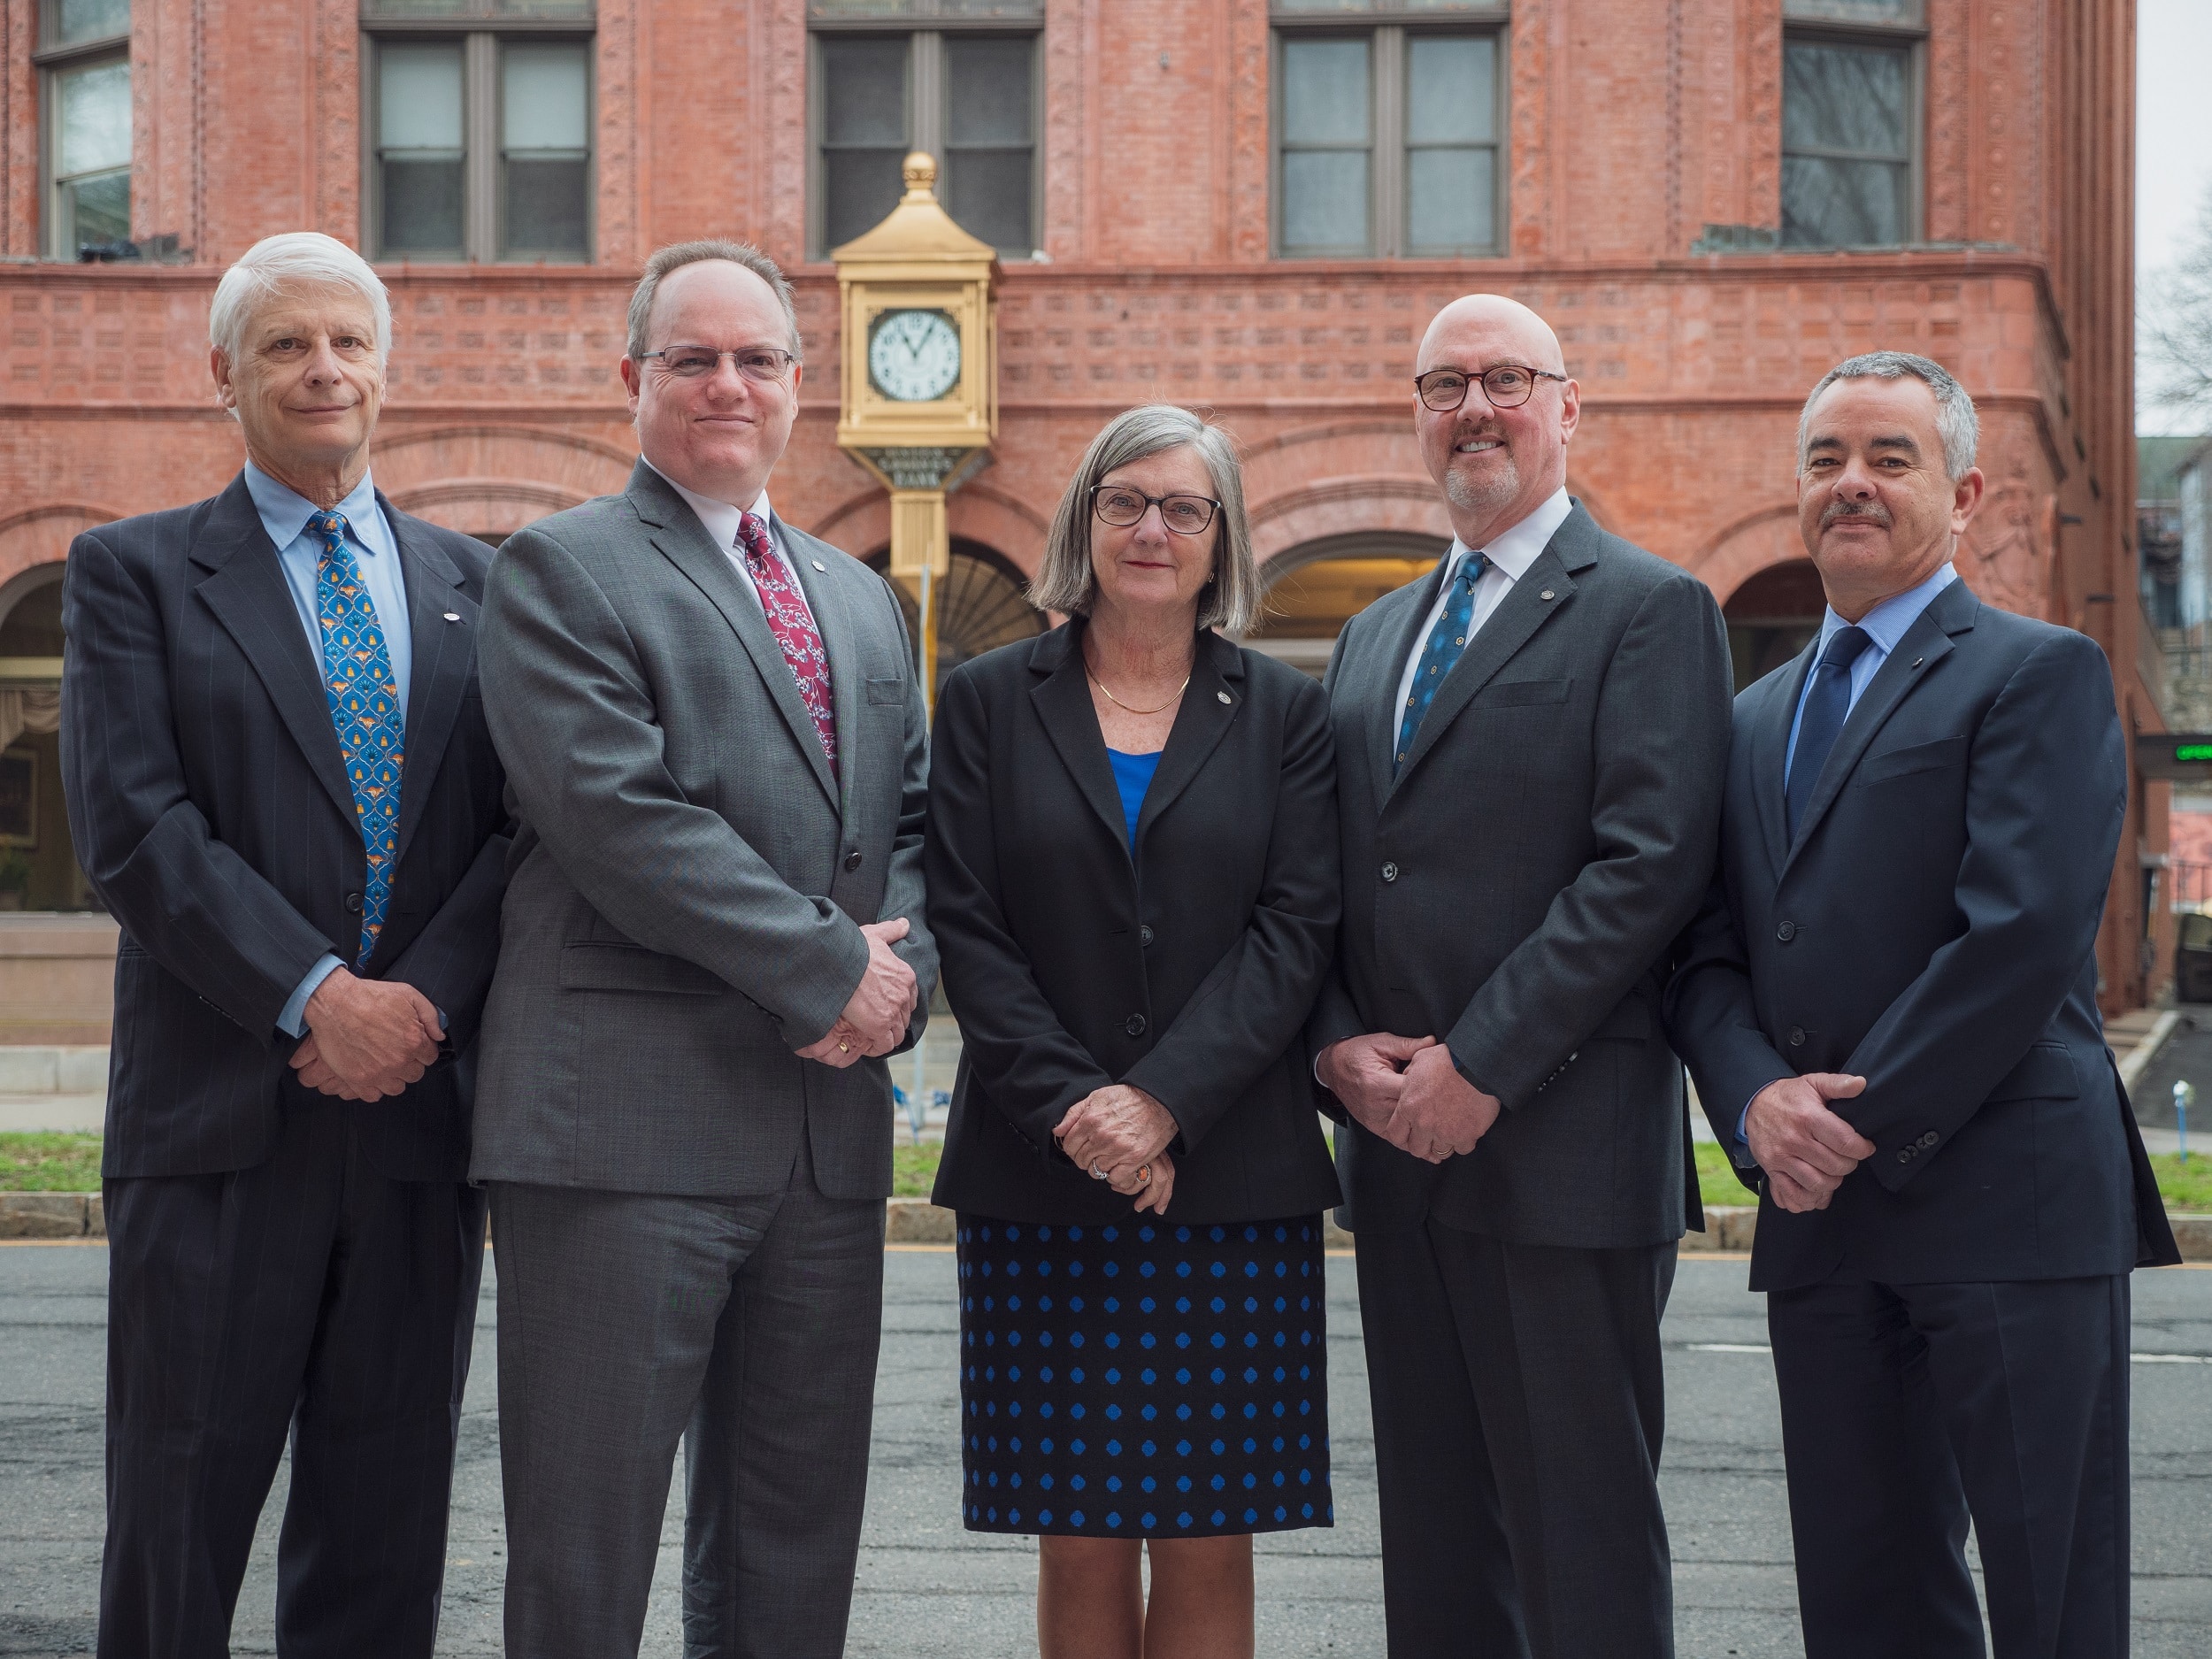 Union Savings Bank in Connecticut executive leadership team